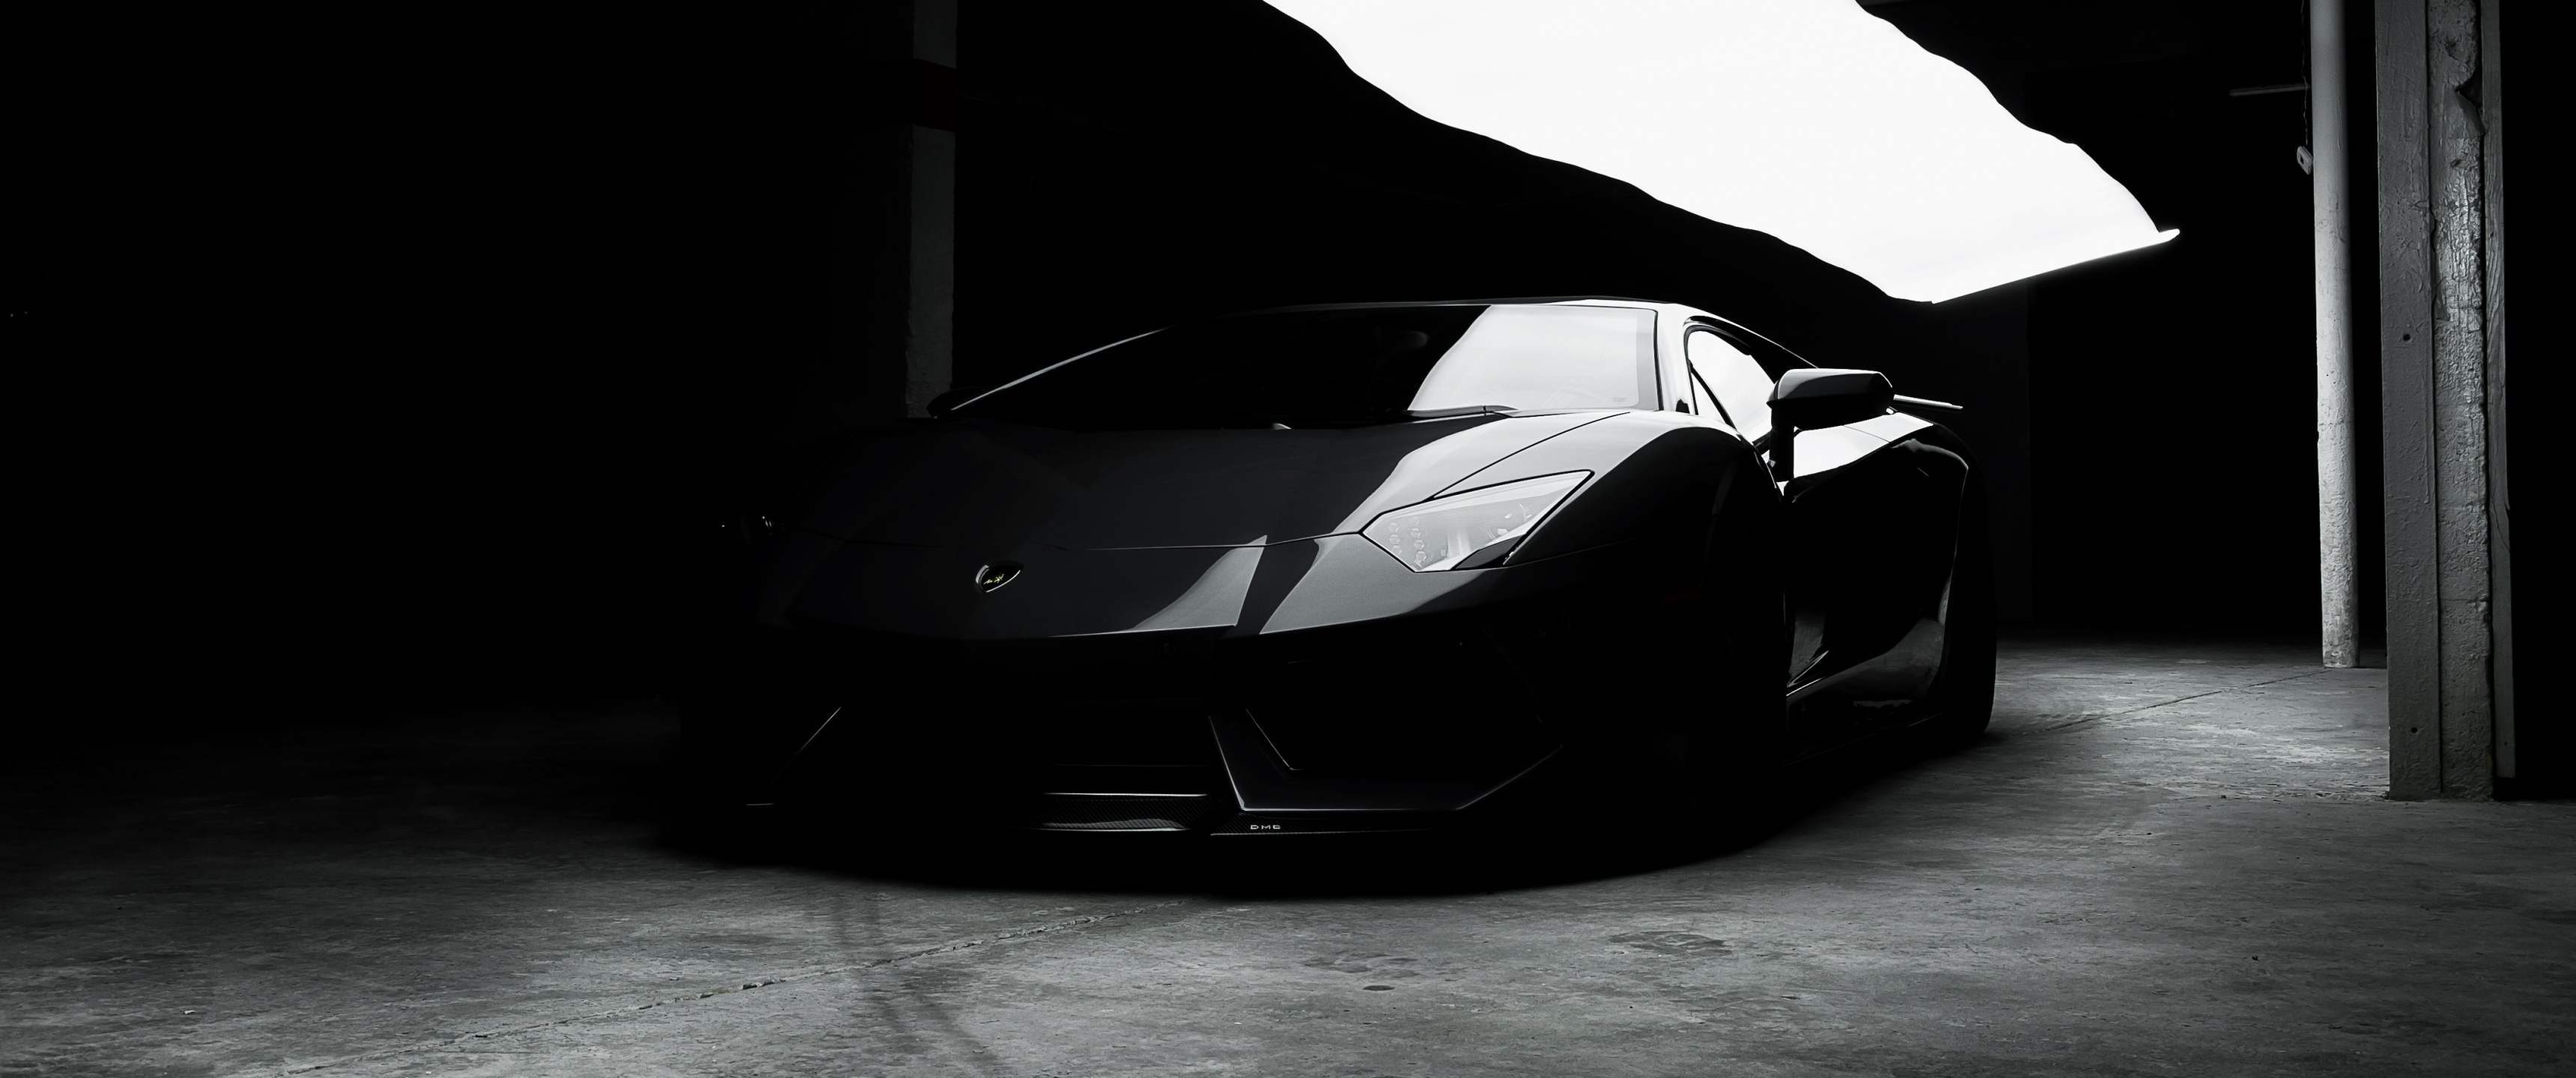 Lamborghini Aventador Wallpaper 4K, Black Cars, CGI, Black Dark